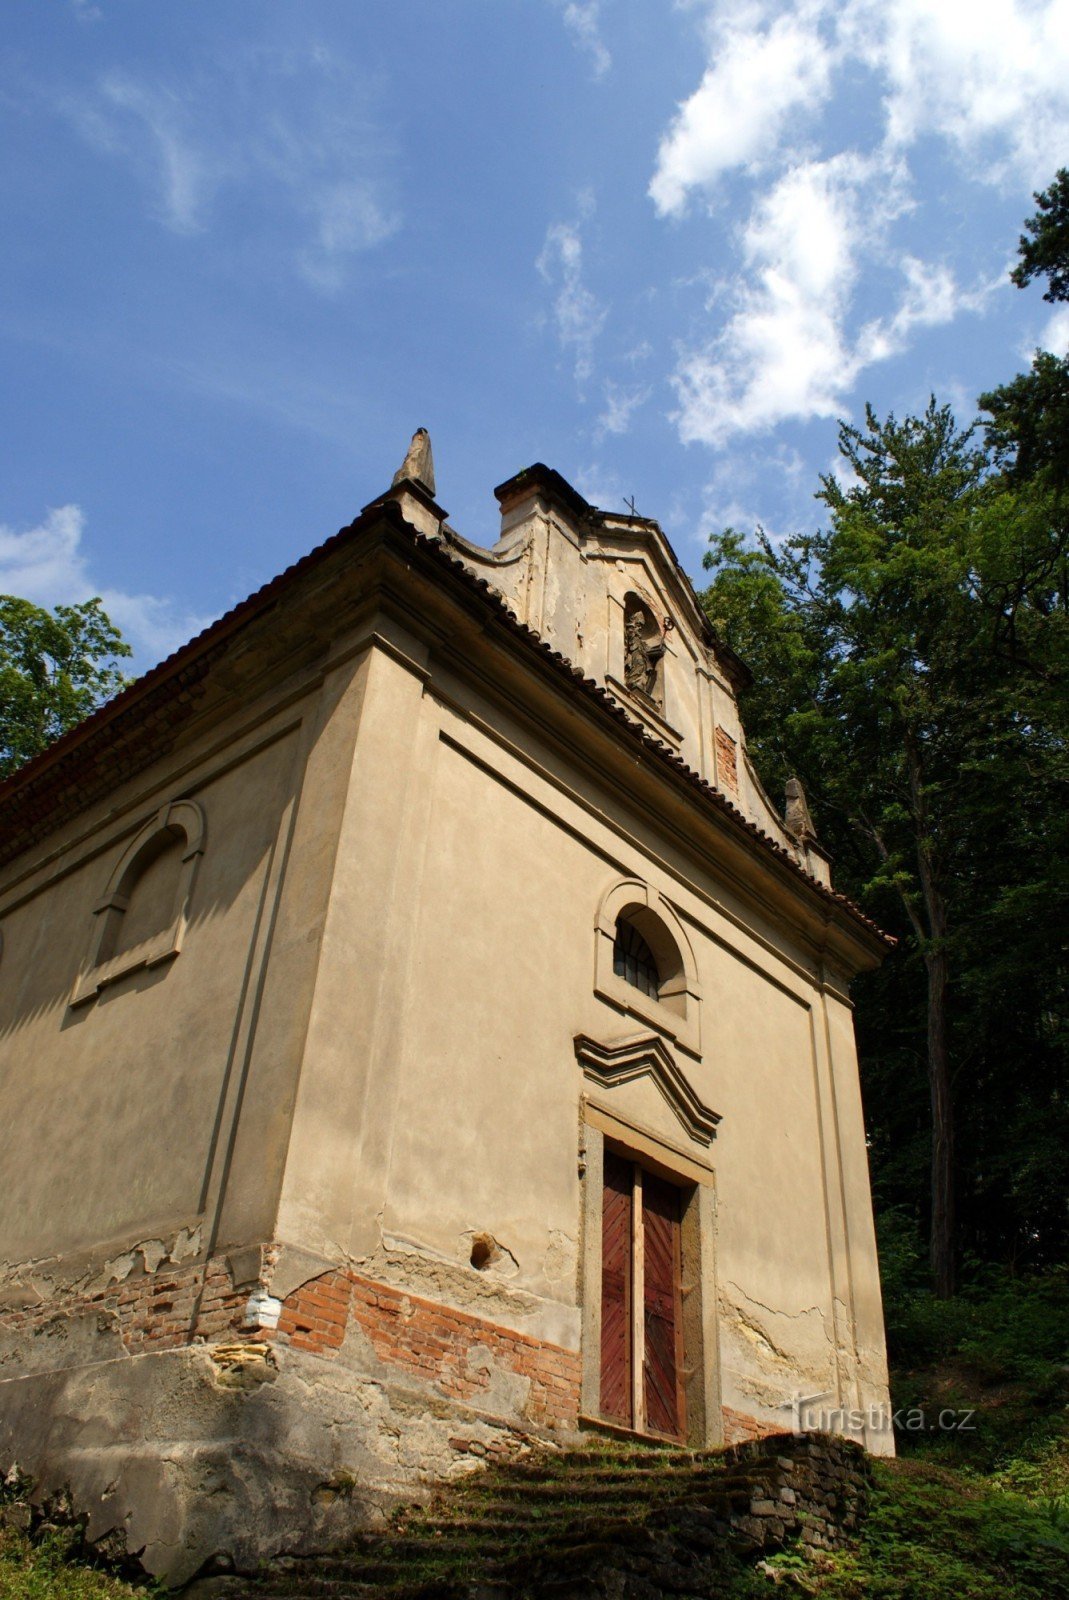 capela S. Vojtěcha